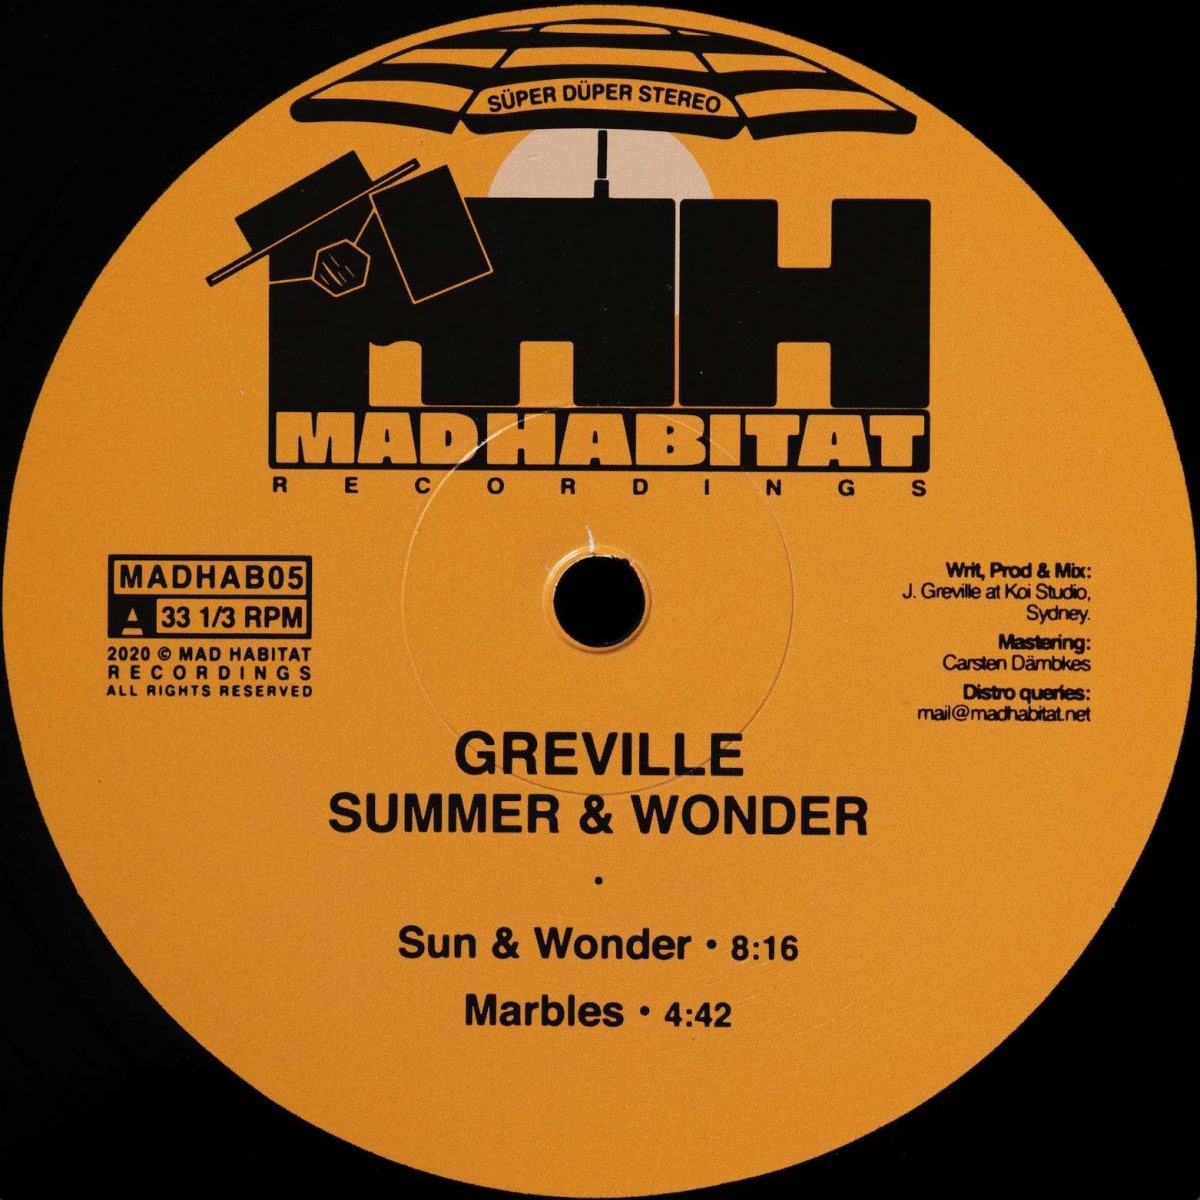 Greville - Summe & Wonder - MADHAB05 - MAD HABITAT